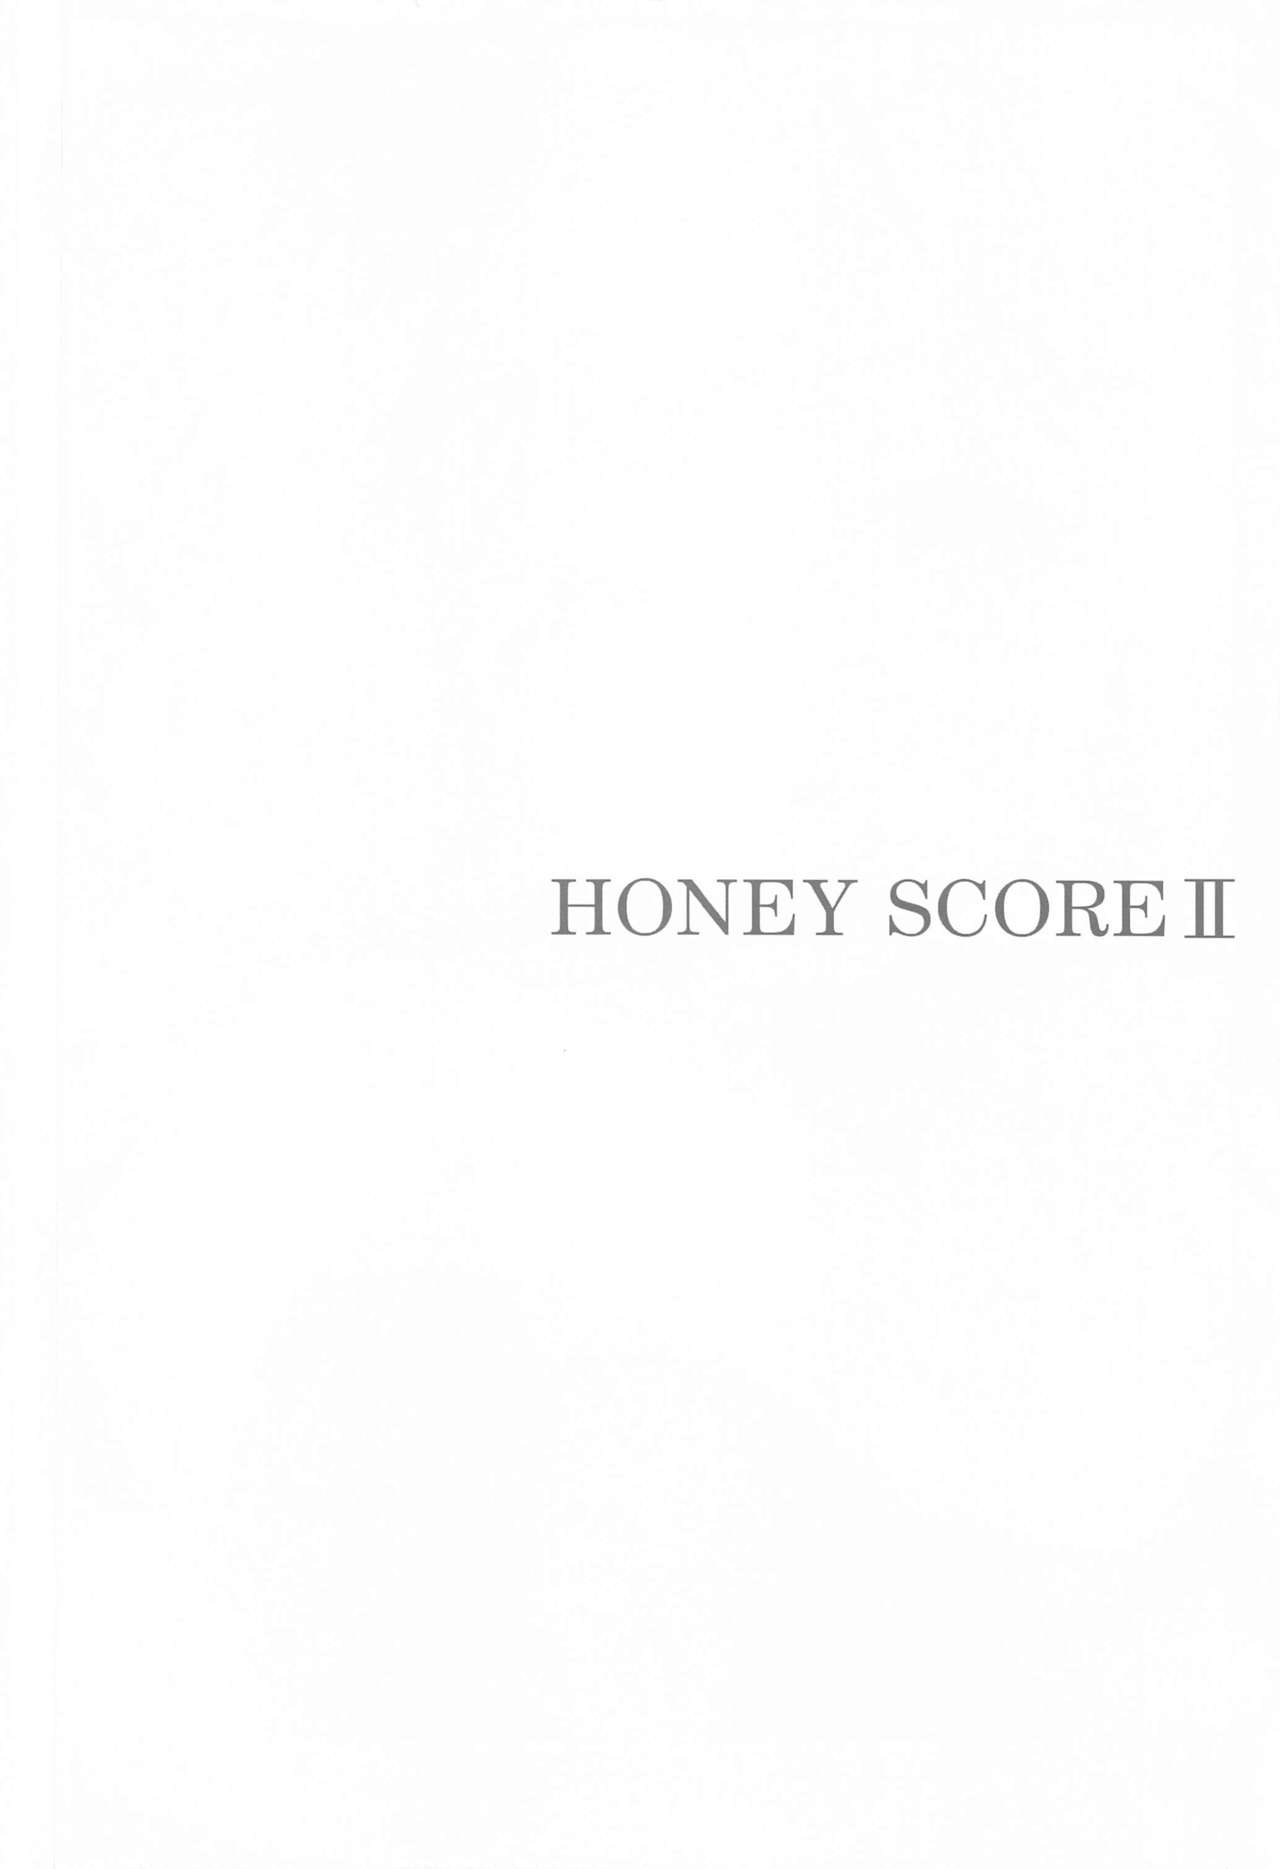 [Tuned by AIU (藍兎)] HONEY SCORE II (BanG Dream!)